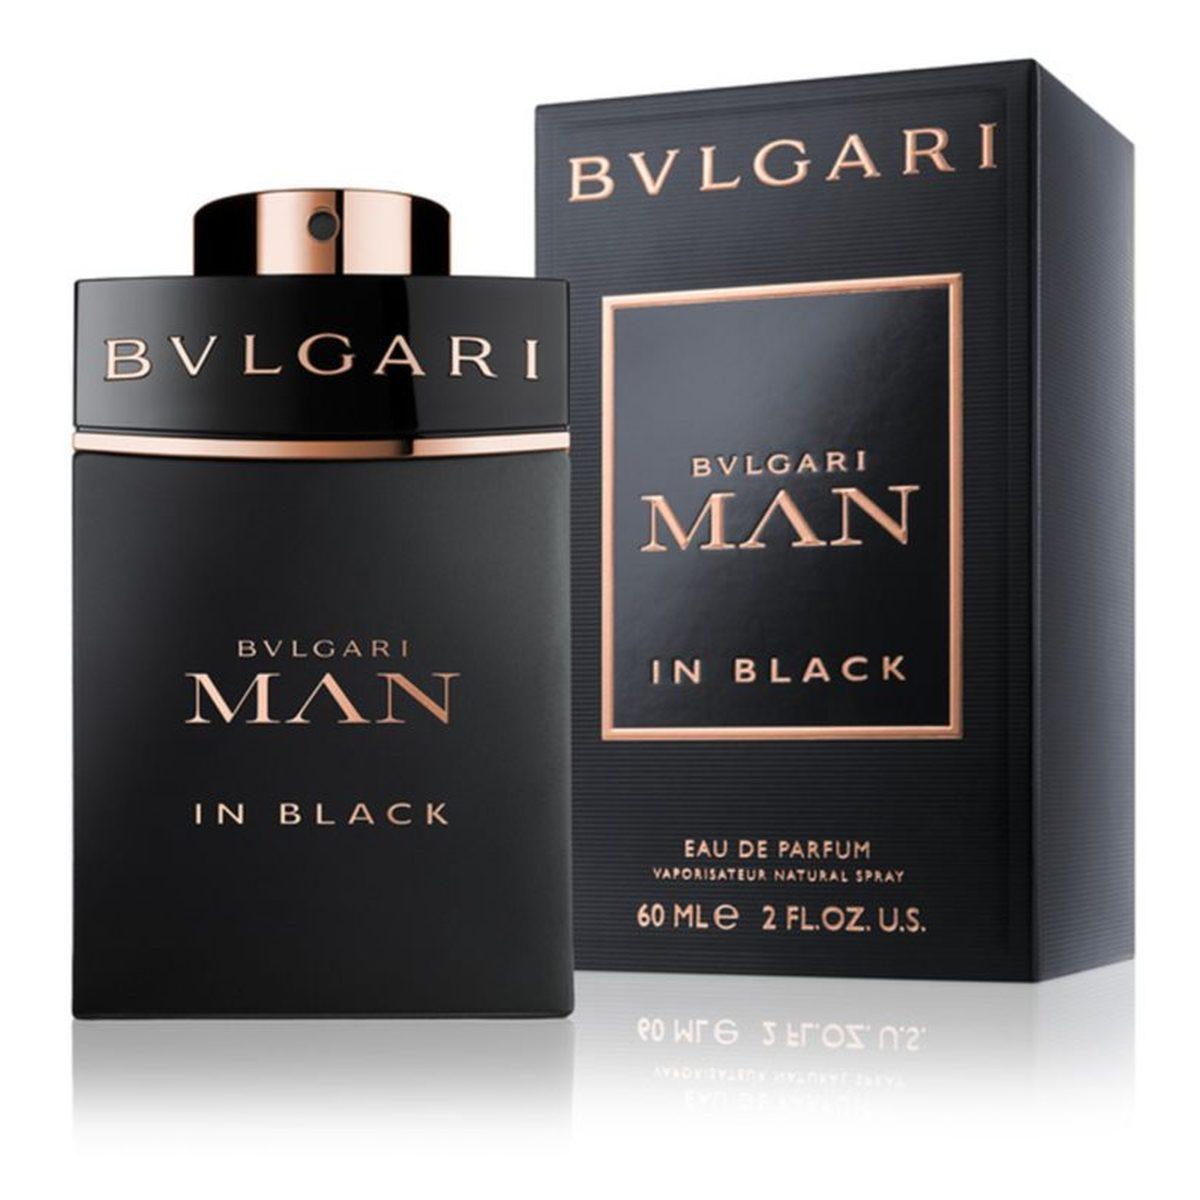 Man in Black 60 ml